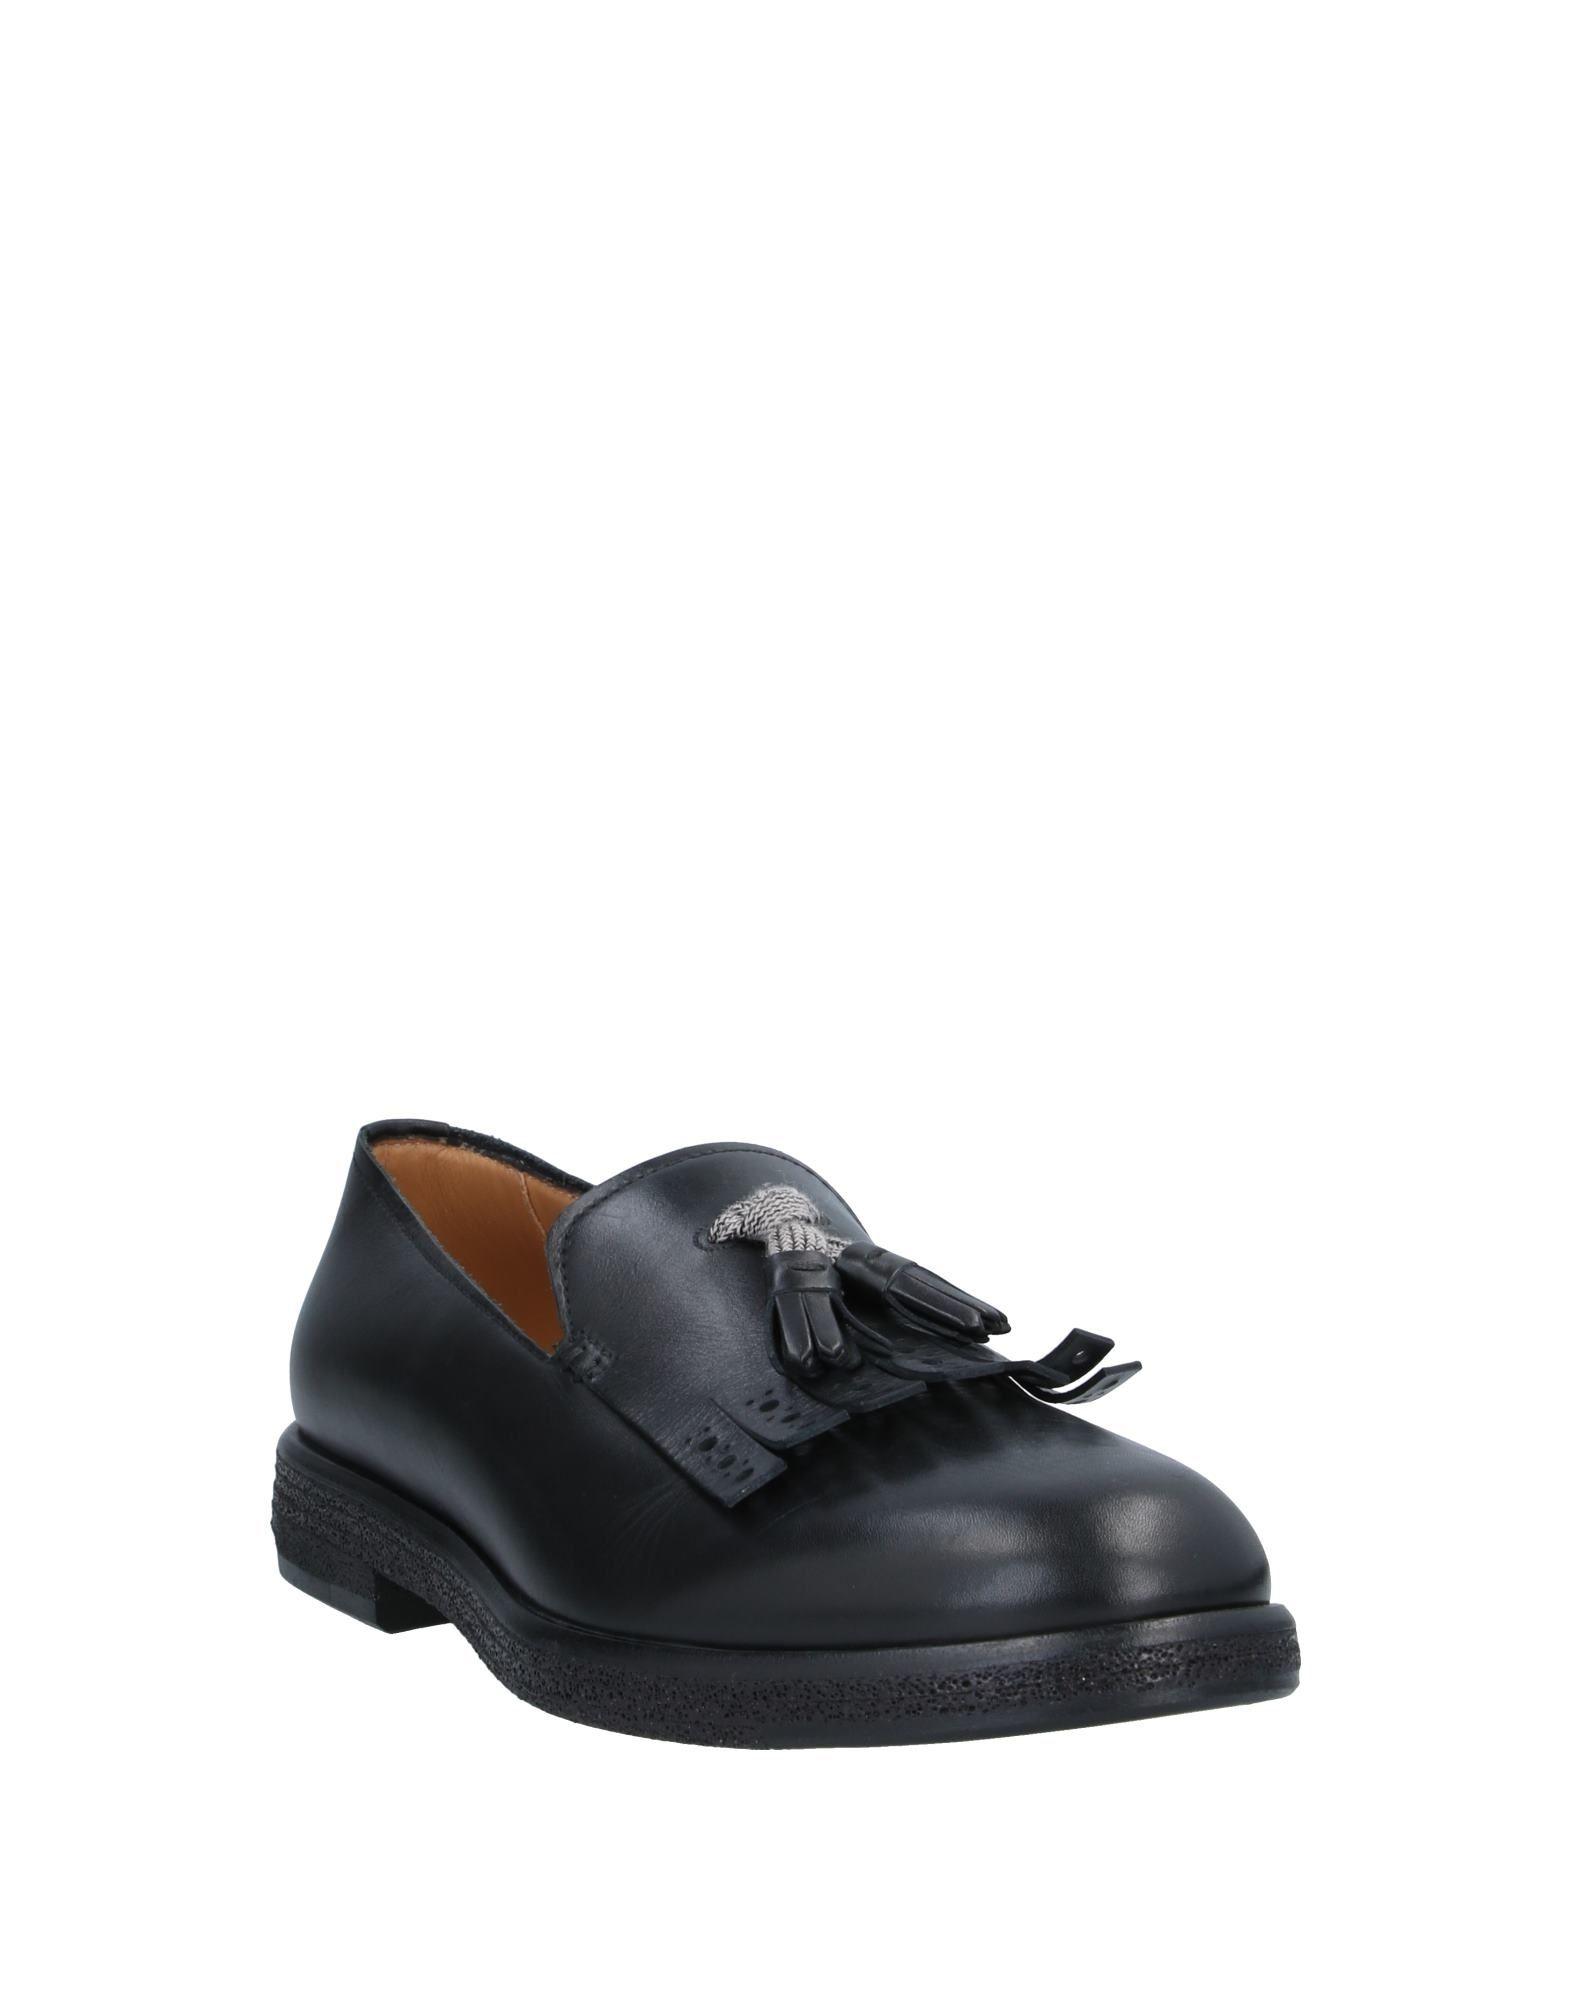 Giorgio Armani Leather Loafer in Black for Men - Lyst